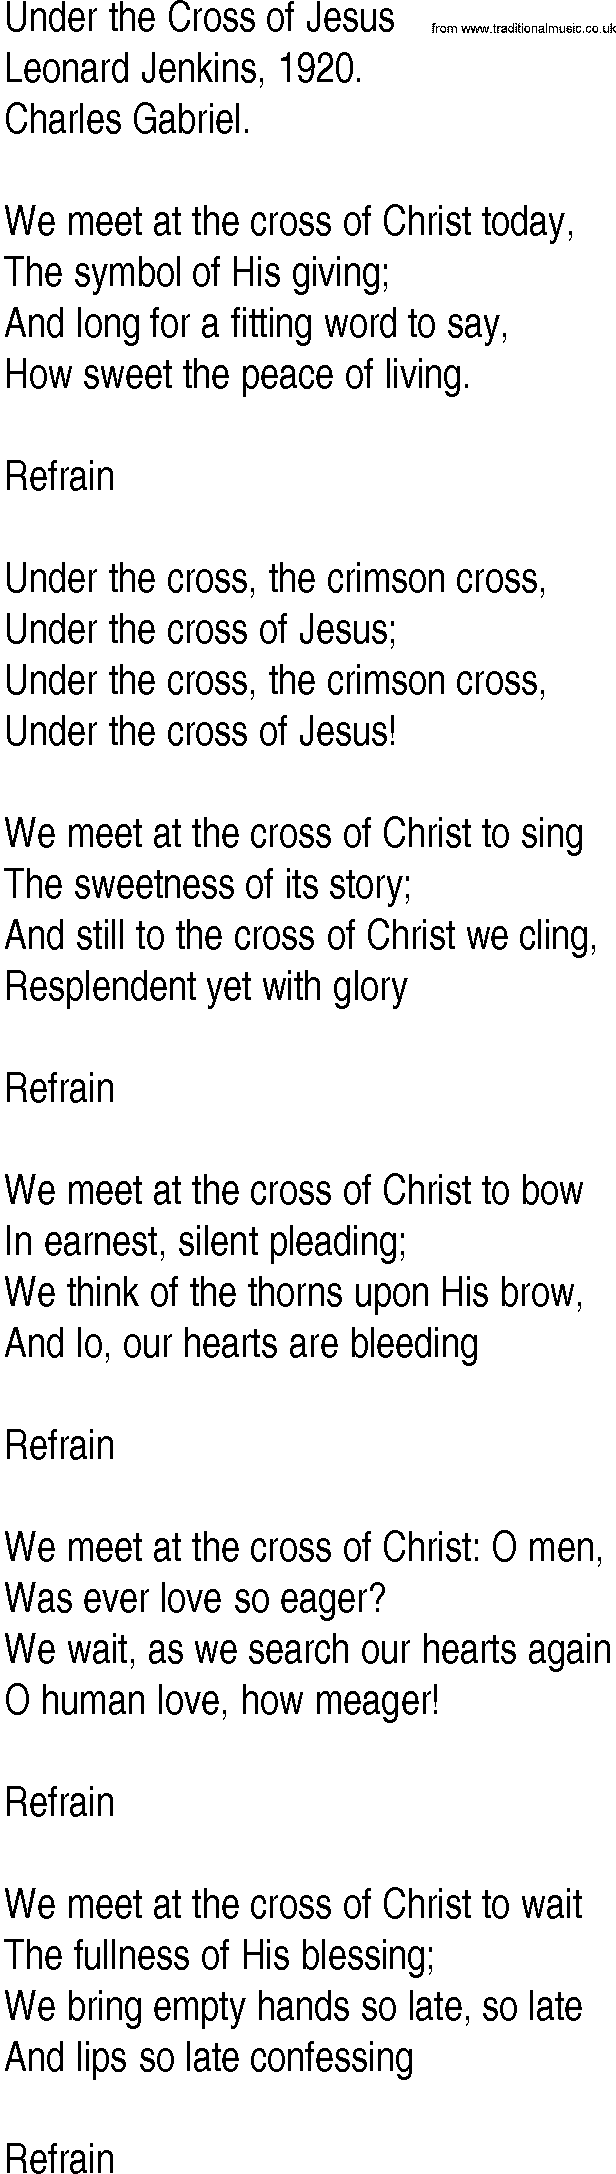 Hymn and Gospel Song: Under the Cross of Jesus by Leonard Jenkins lyrics